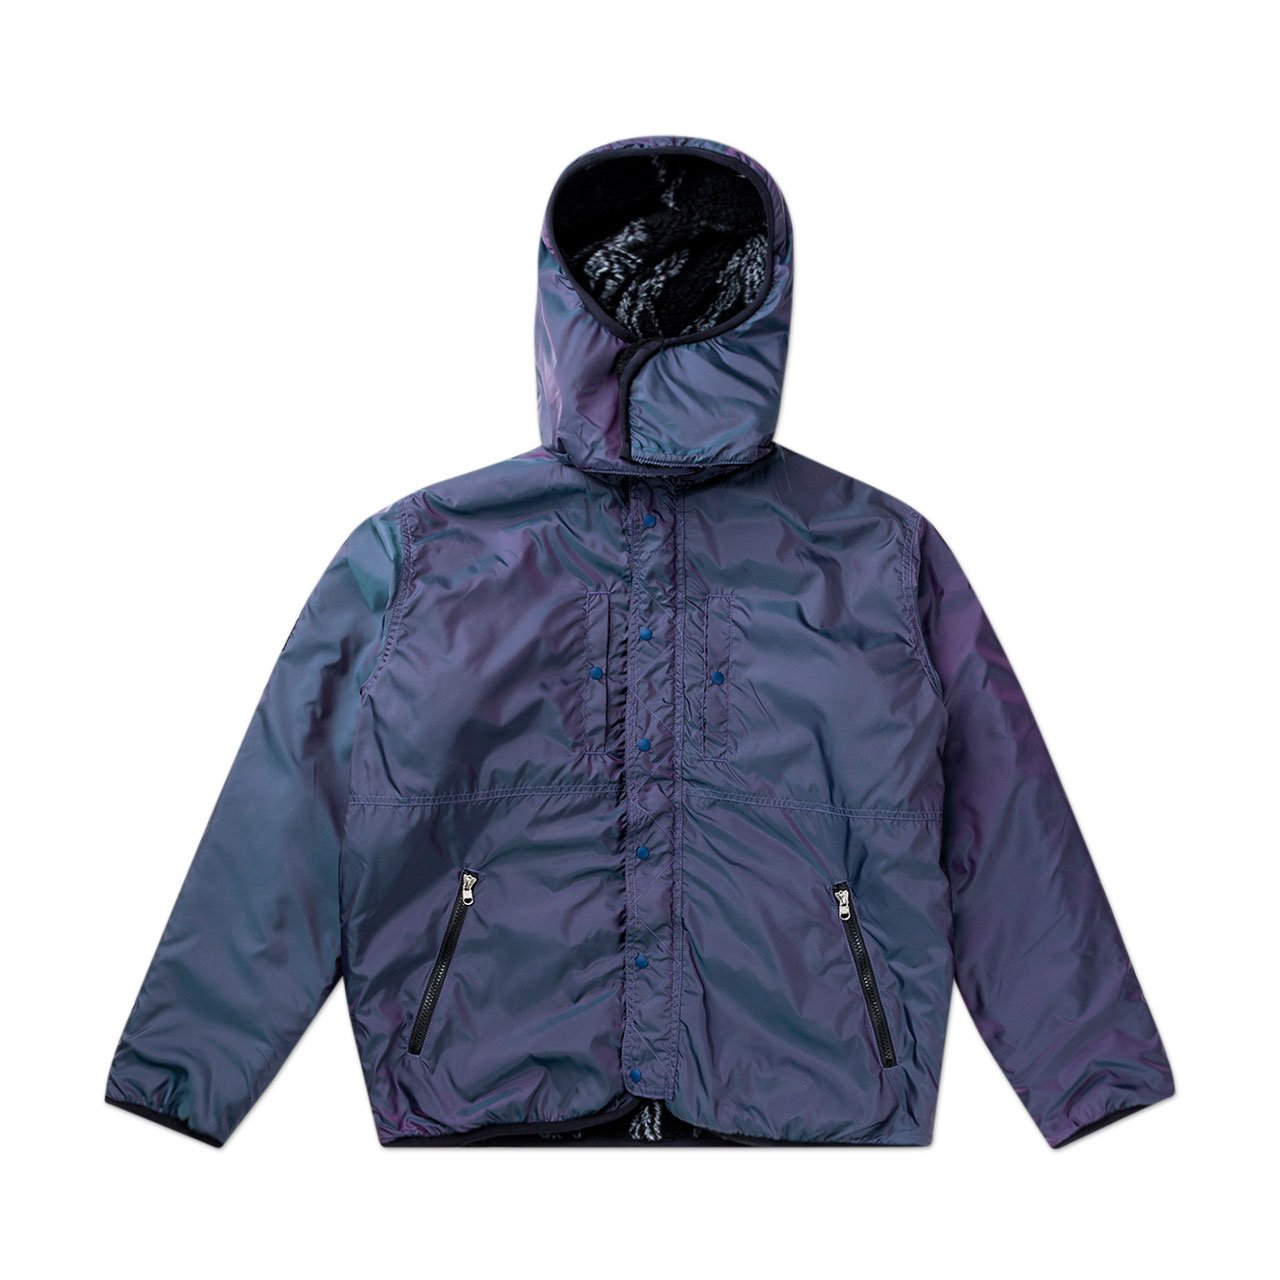 flagstuff reversible jacket (black) - 19aw-fs-06 - a.plus - Image - 1